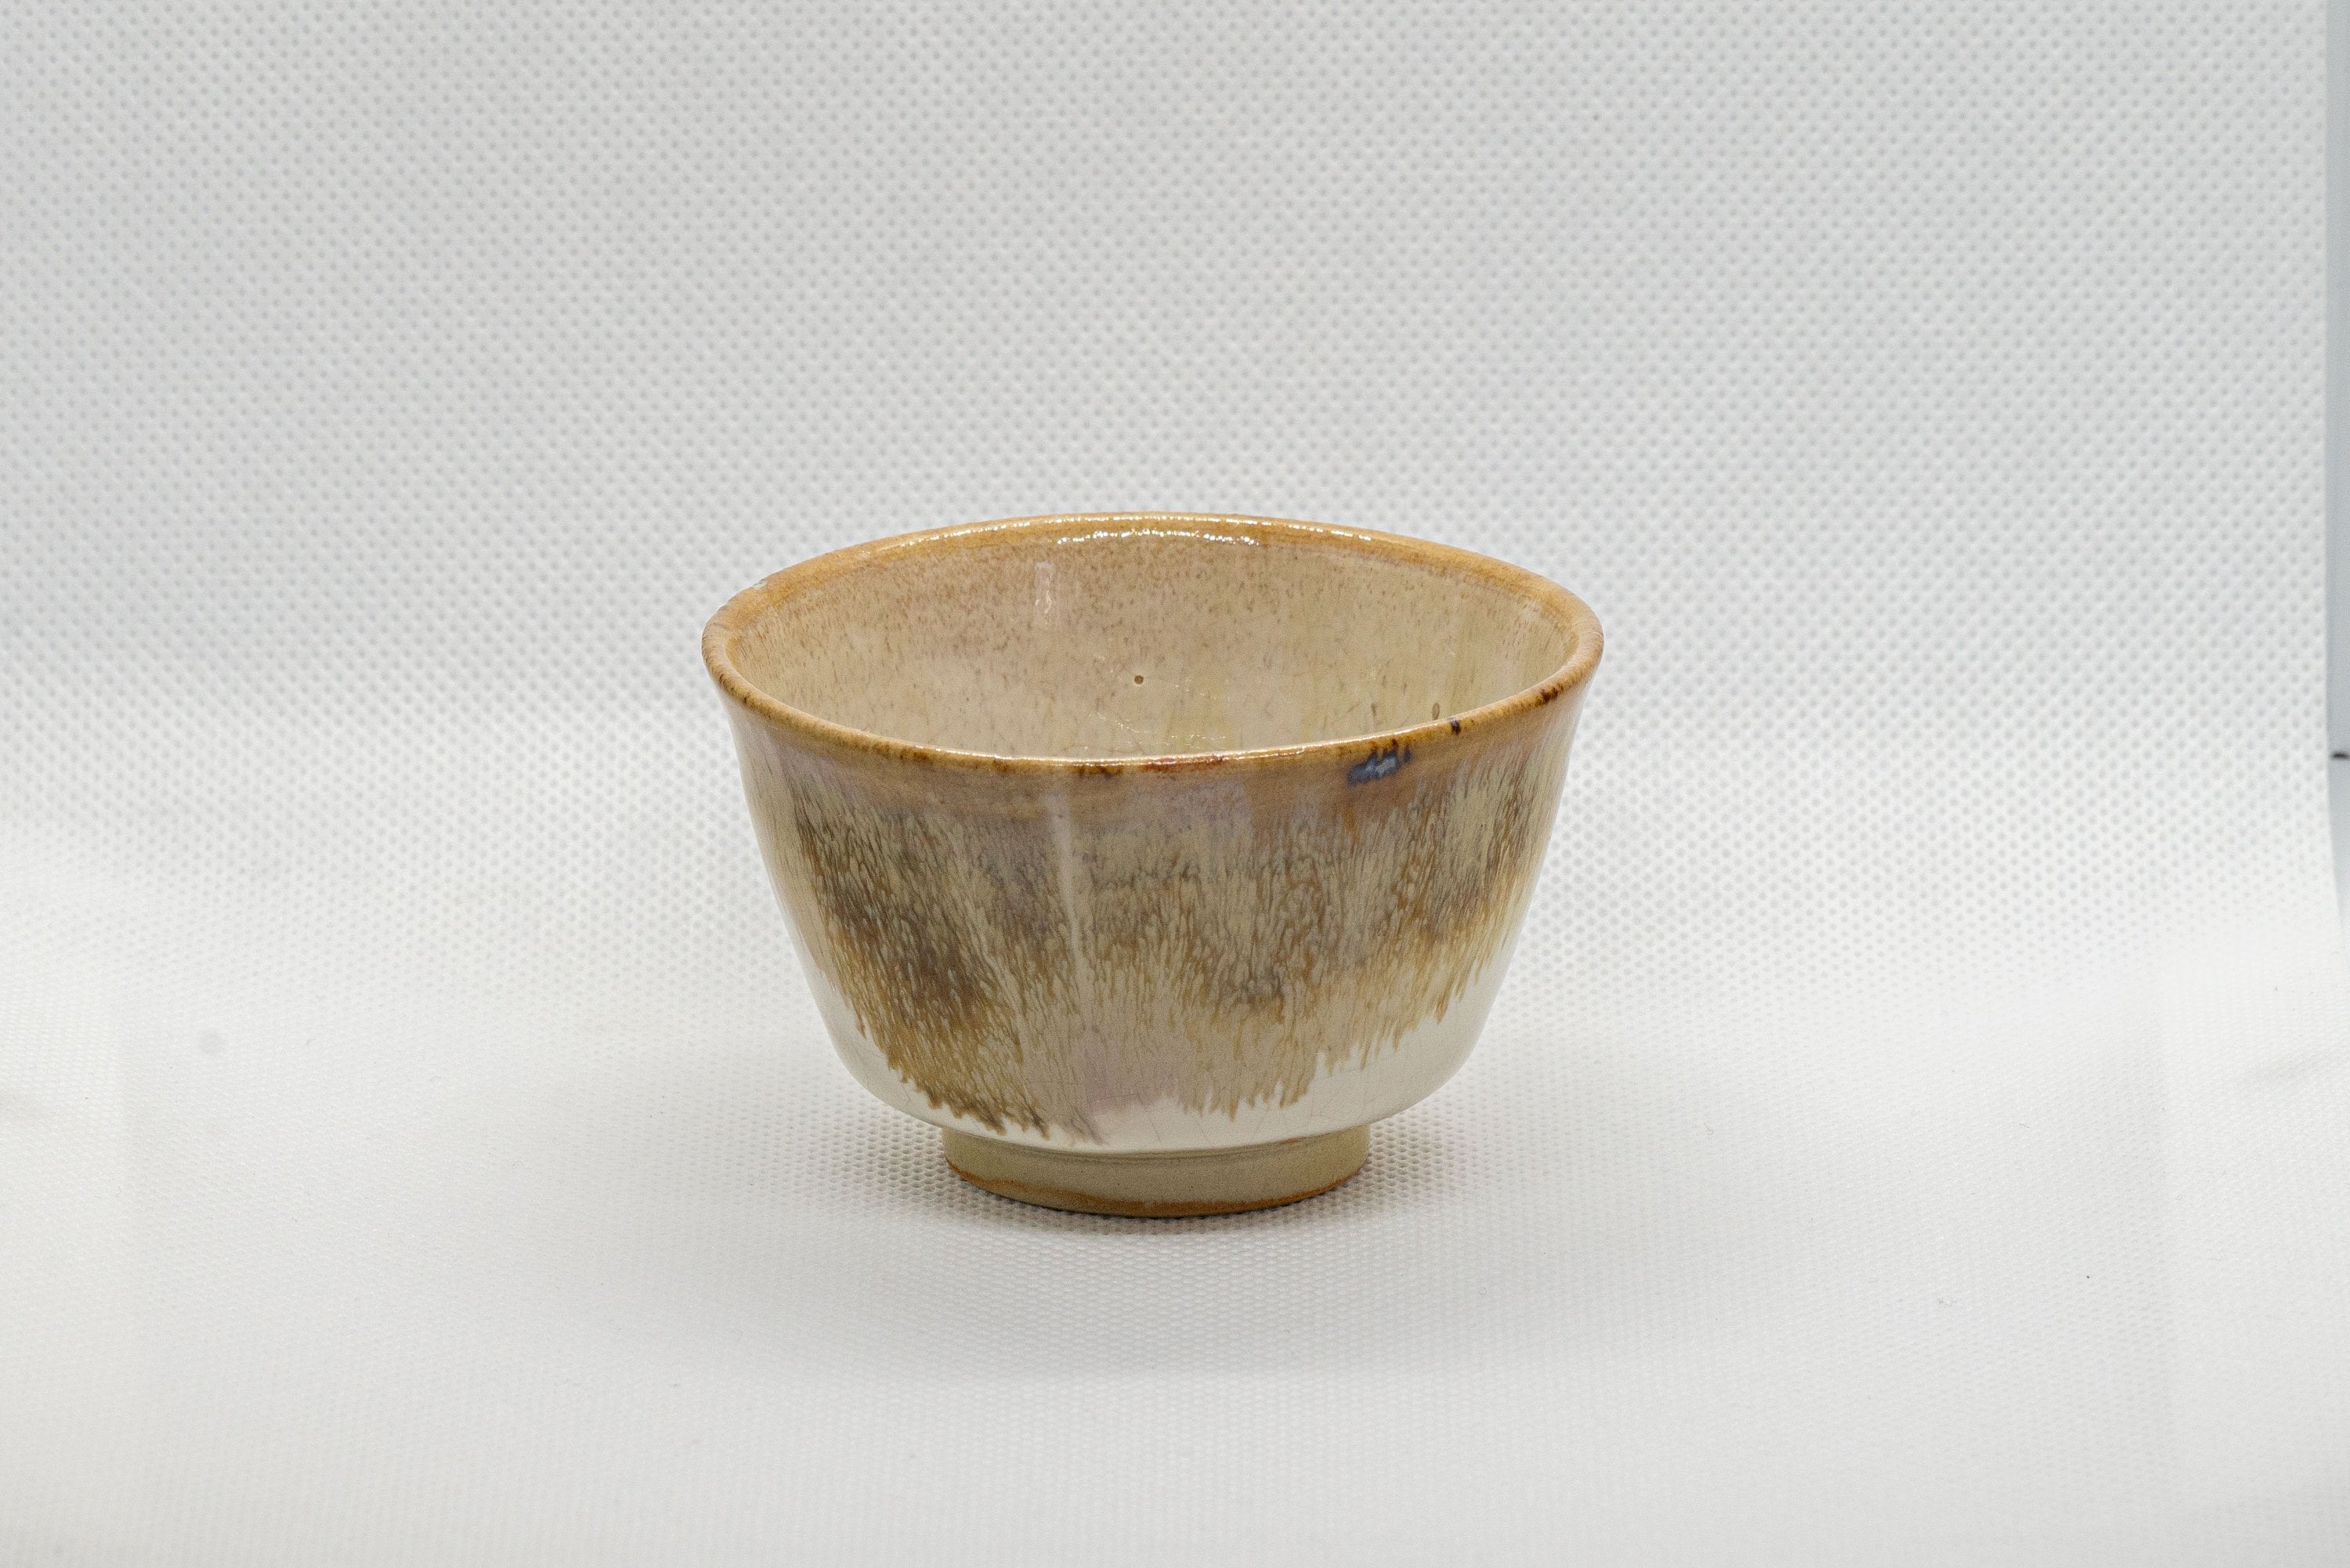 Japanese Teacups - Set of 4 Hare's Fur Glazed Senchawan - 85ml